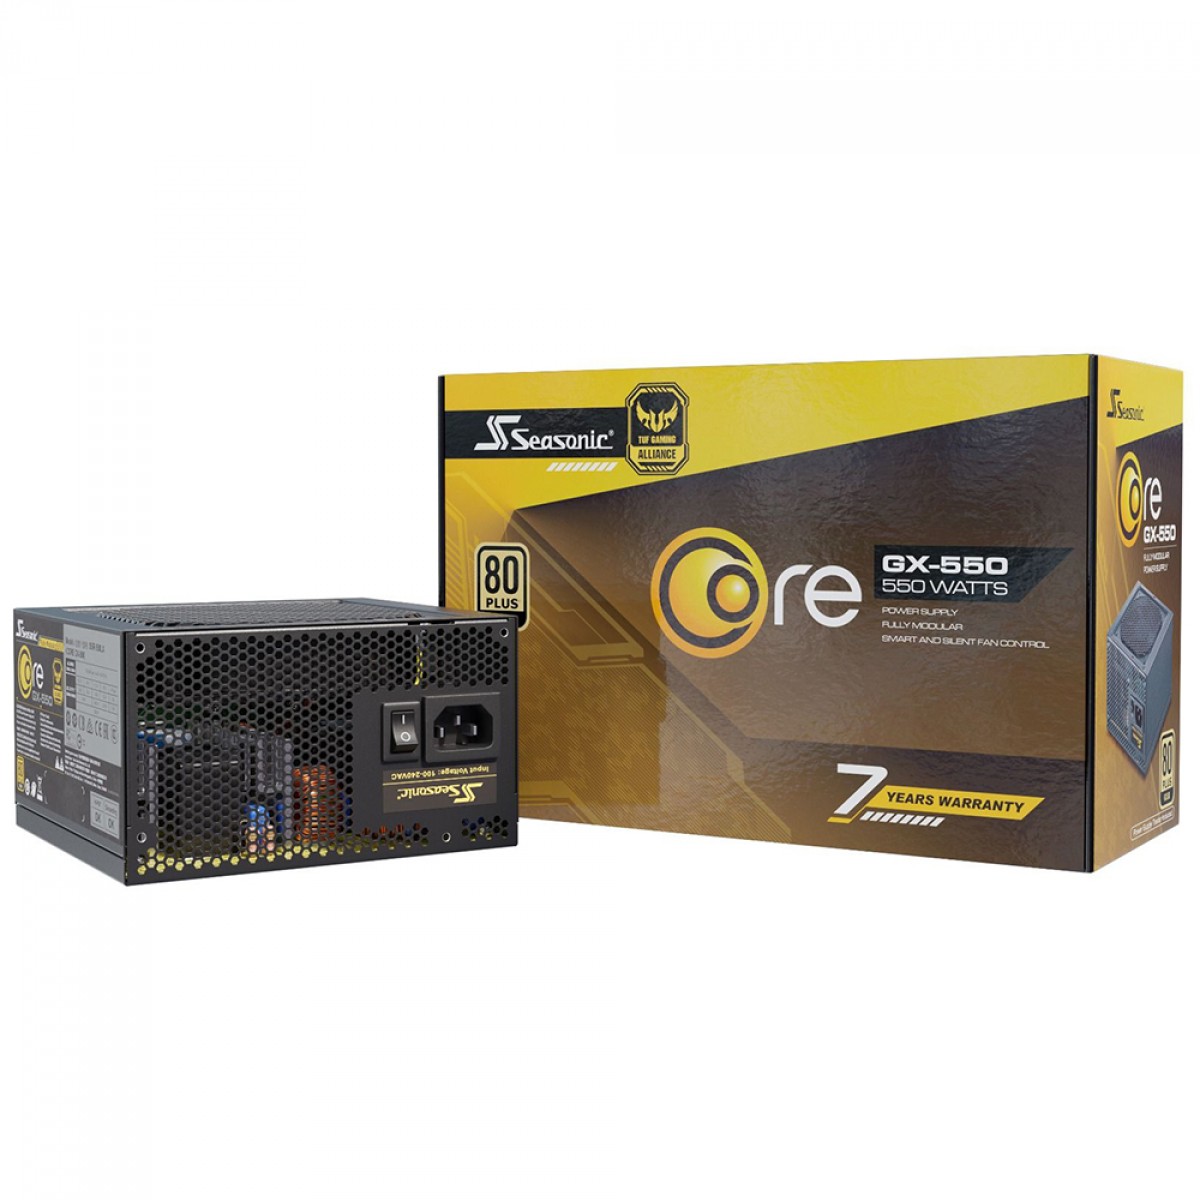 Fonte Seasonic Core GX-550, 550W, 80 Plus Gold, Full Modular